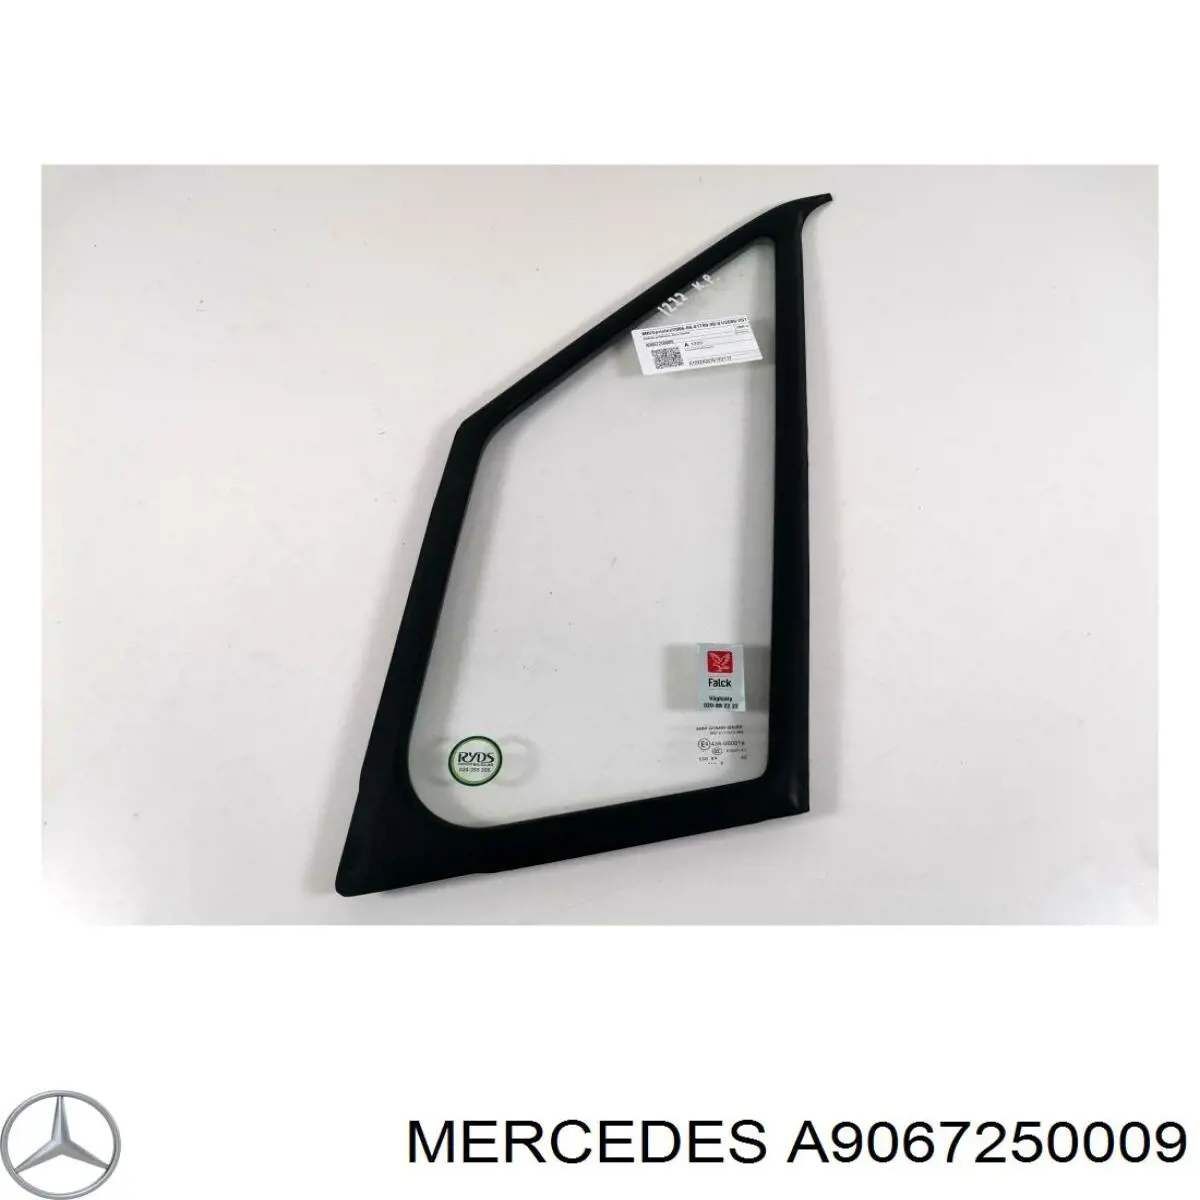 A9067250009 Mercedes ventana de vidrio puerta delantera izquierda